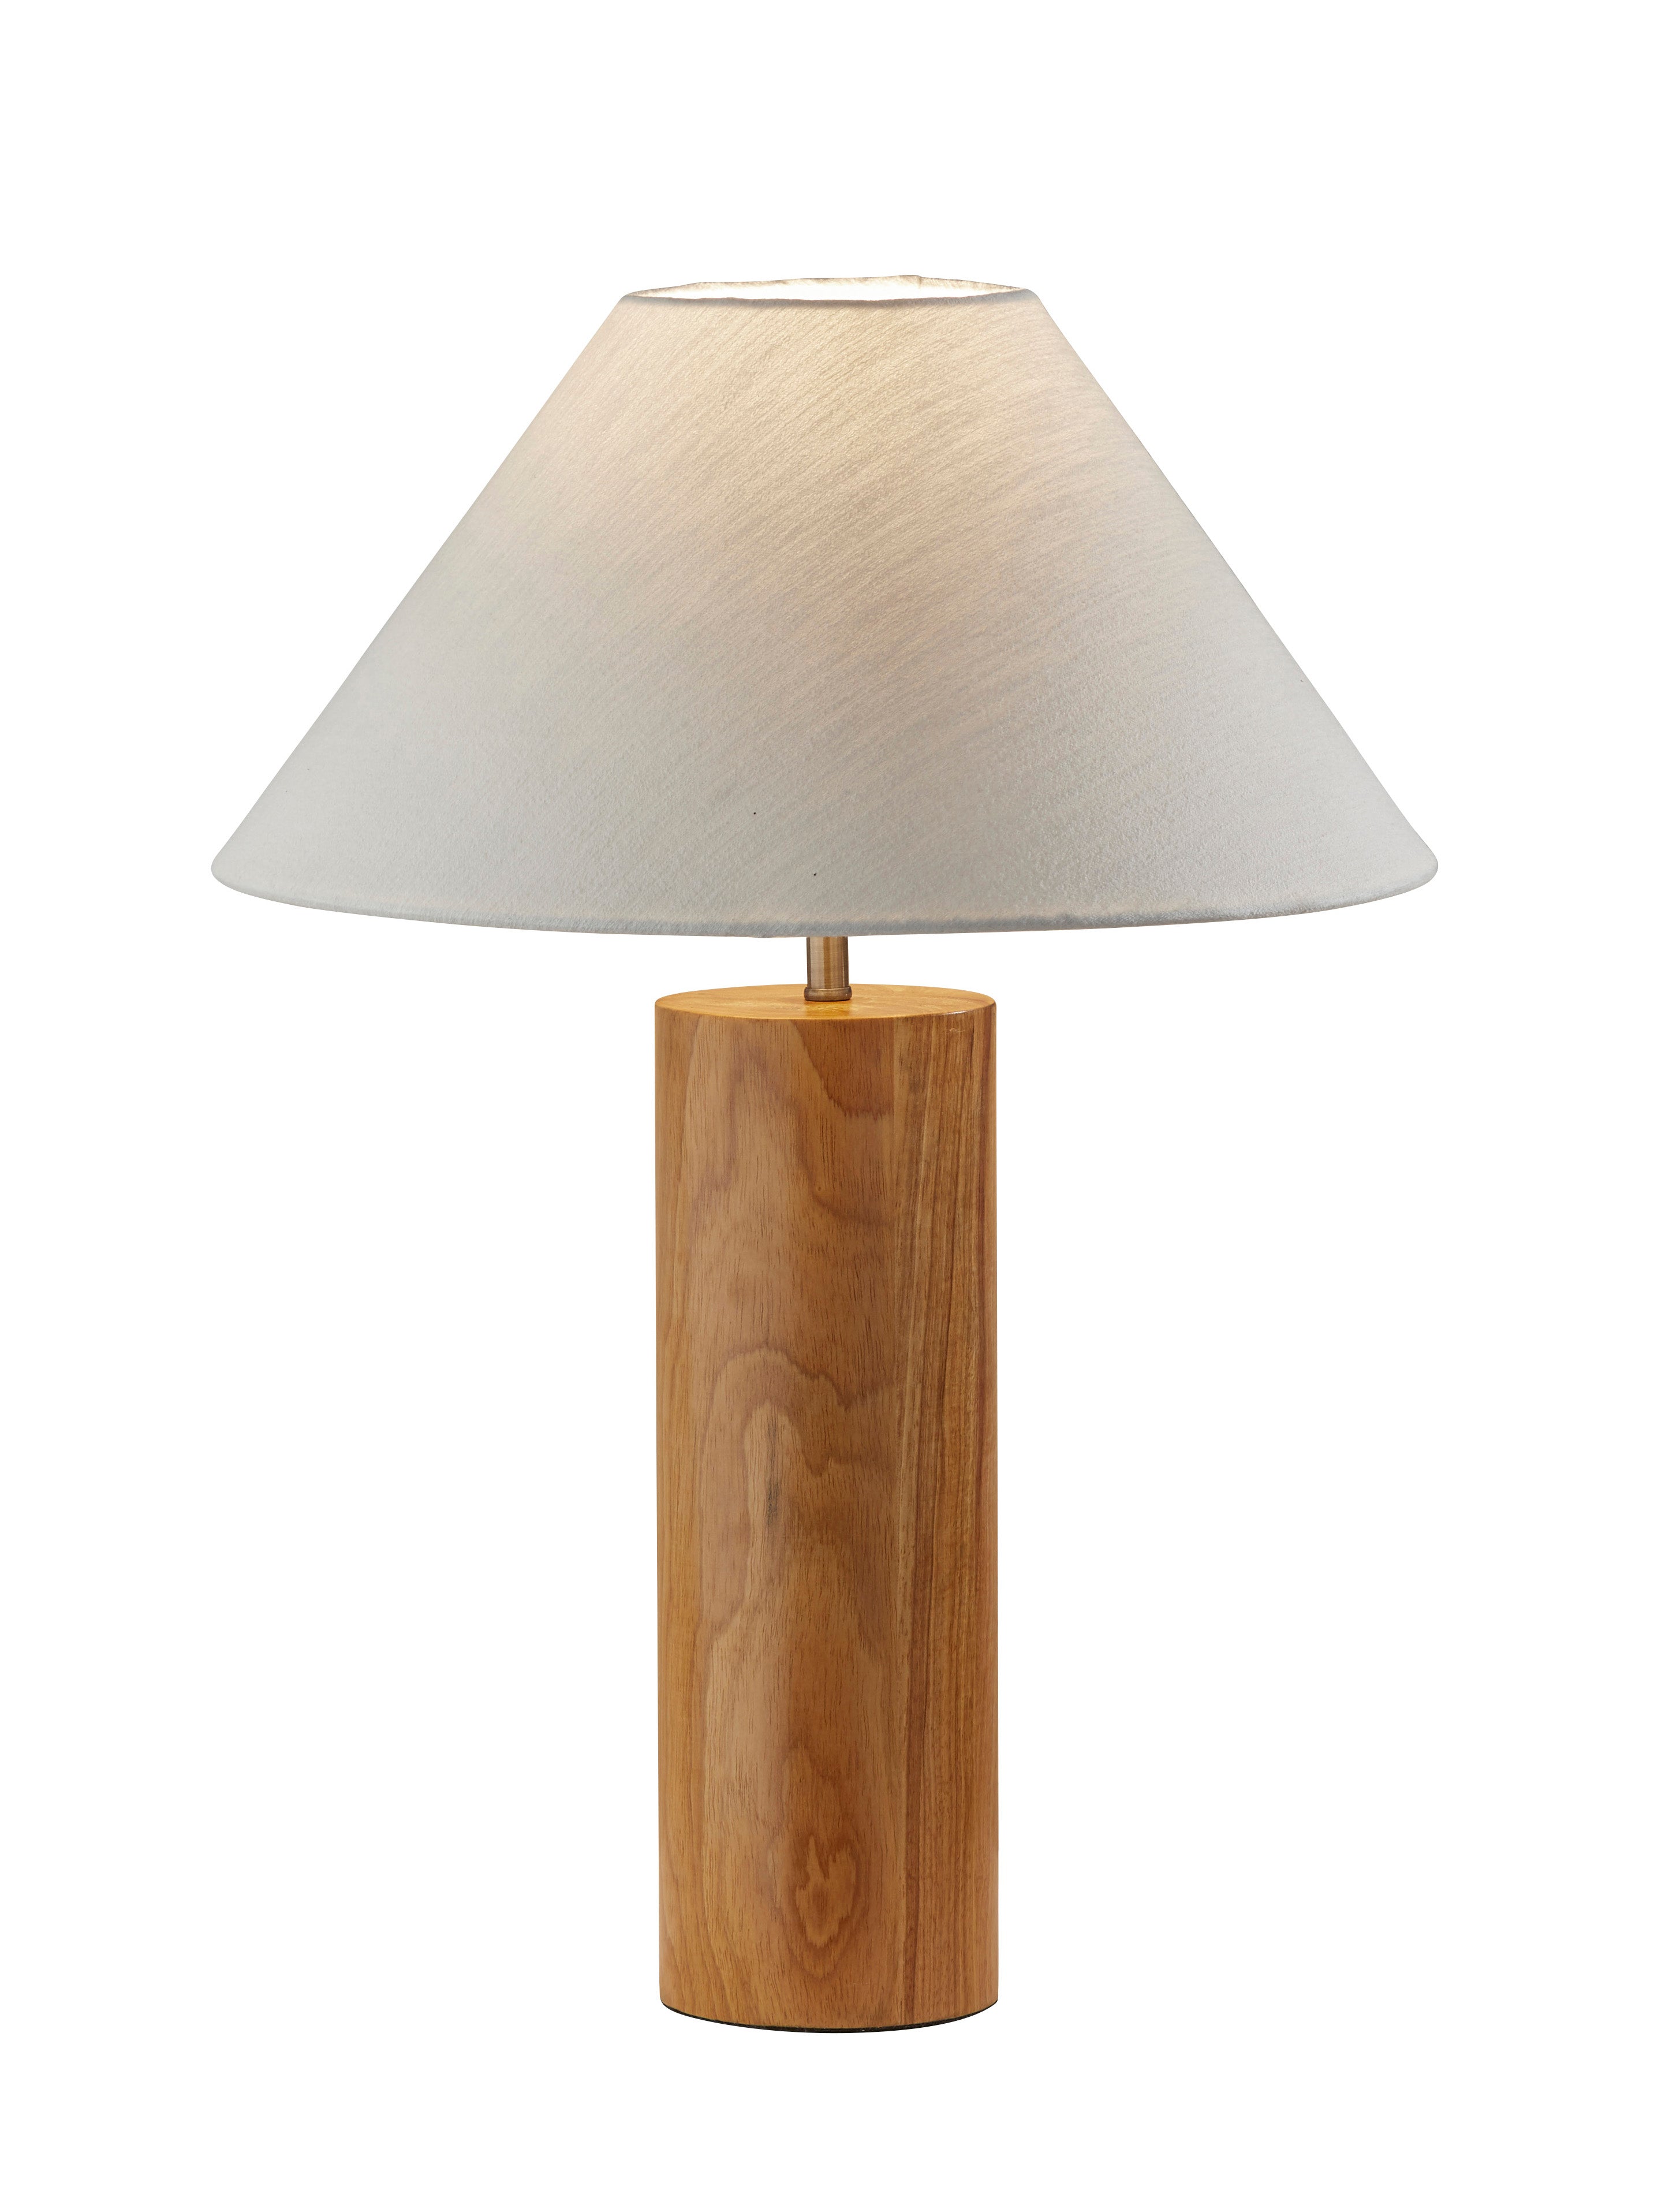 MARTIN Lampe sur table Bois, Or - 1509-12 | ADESSO